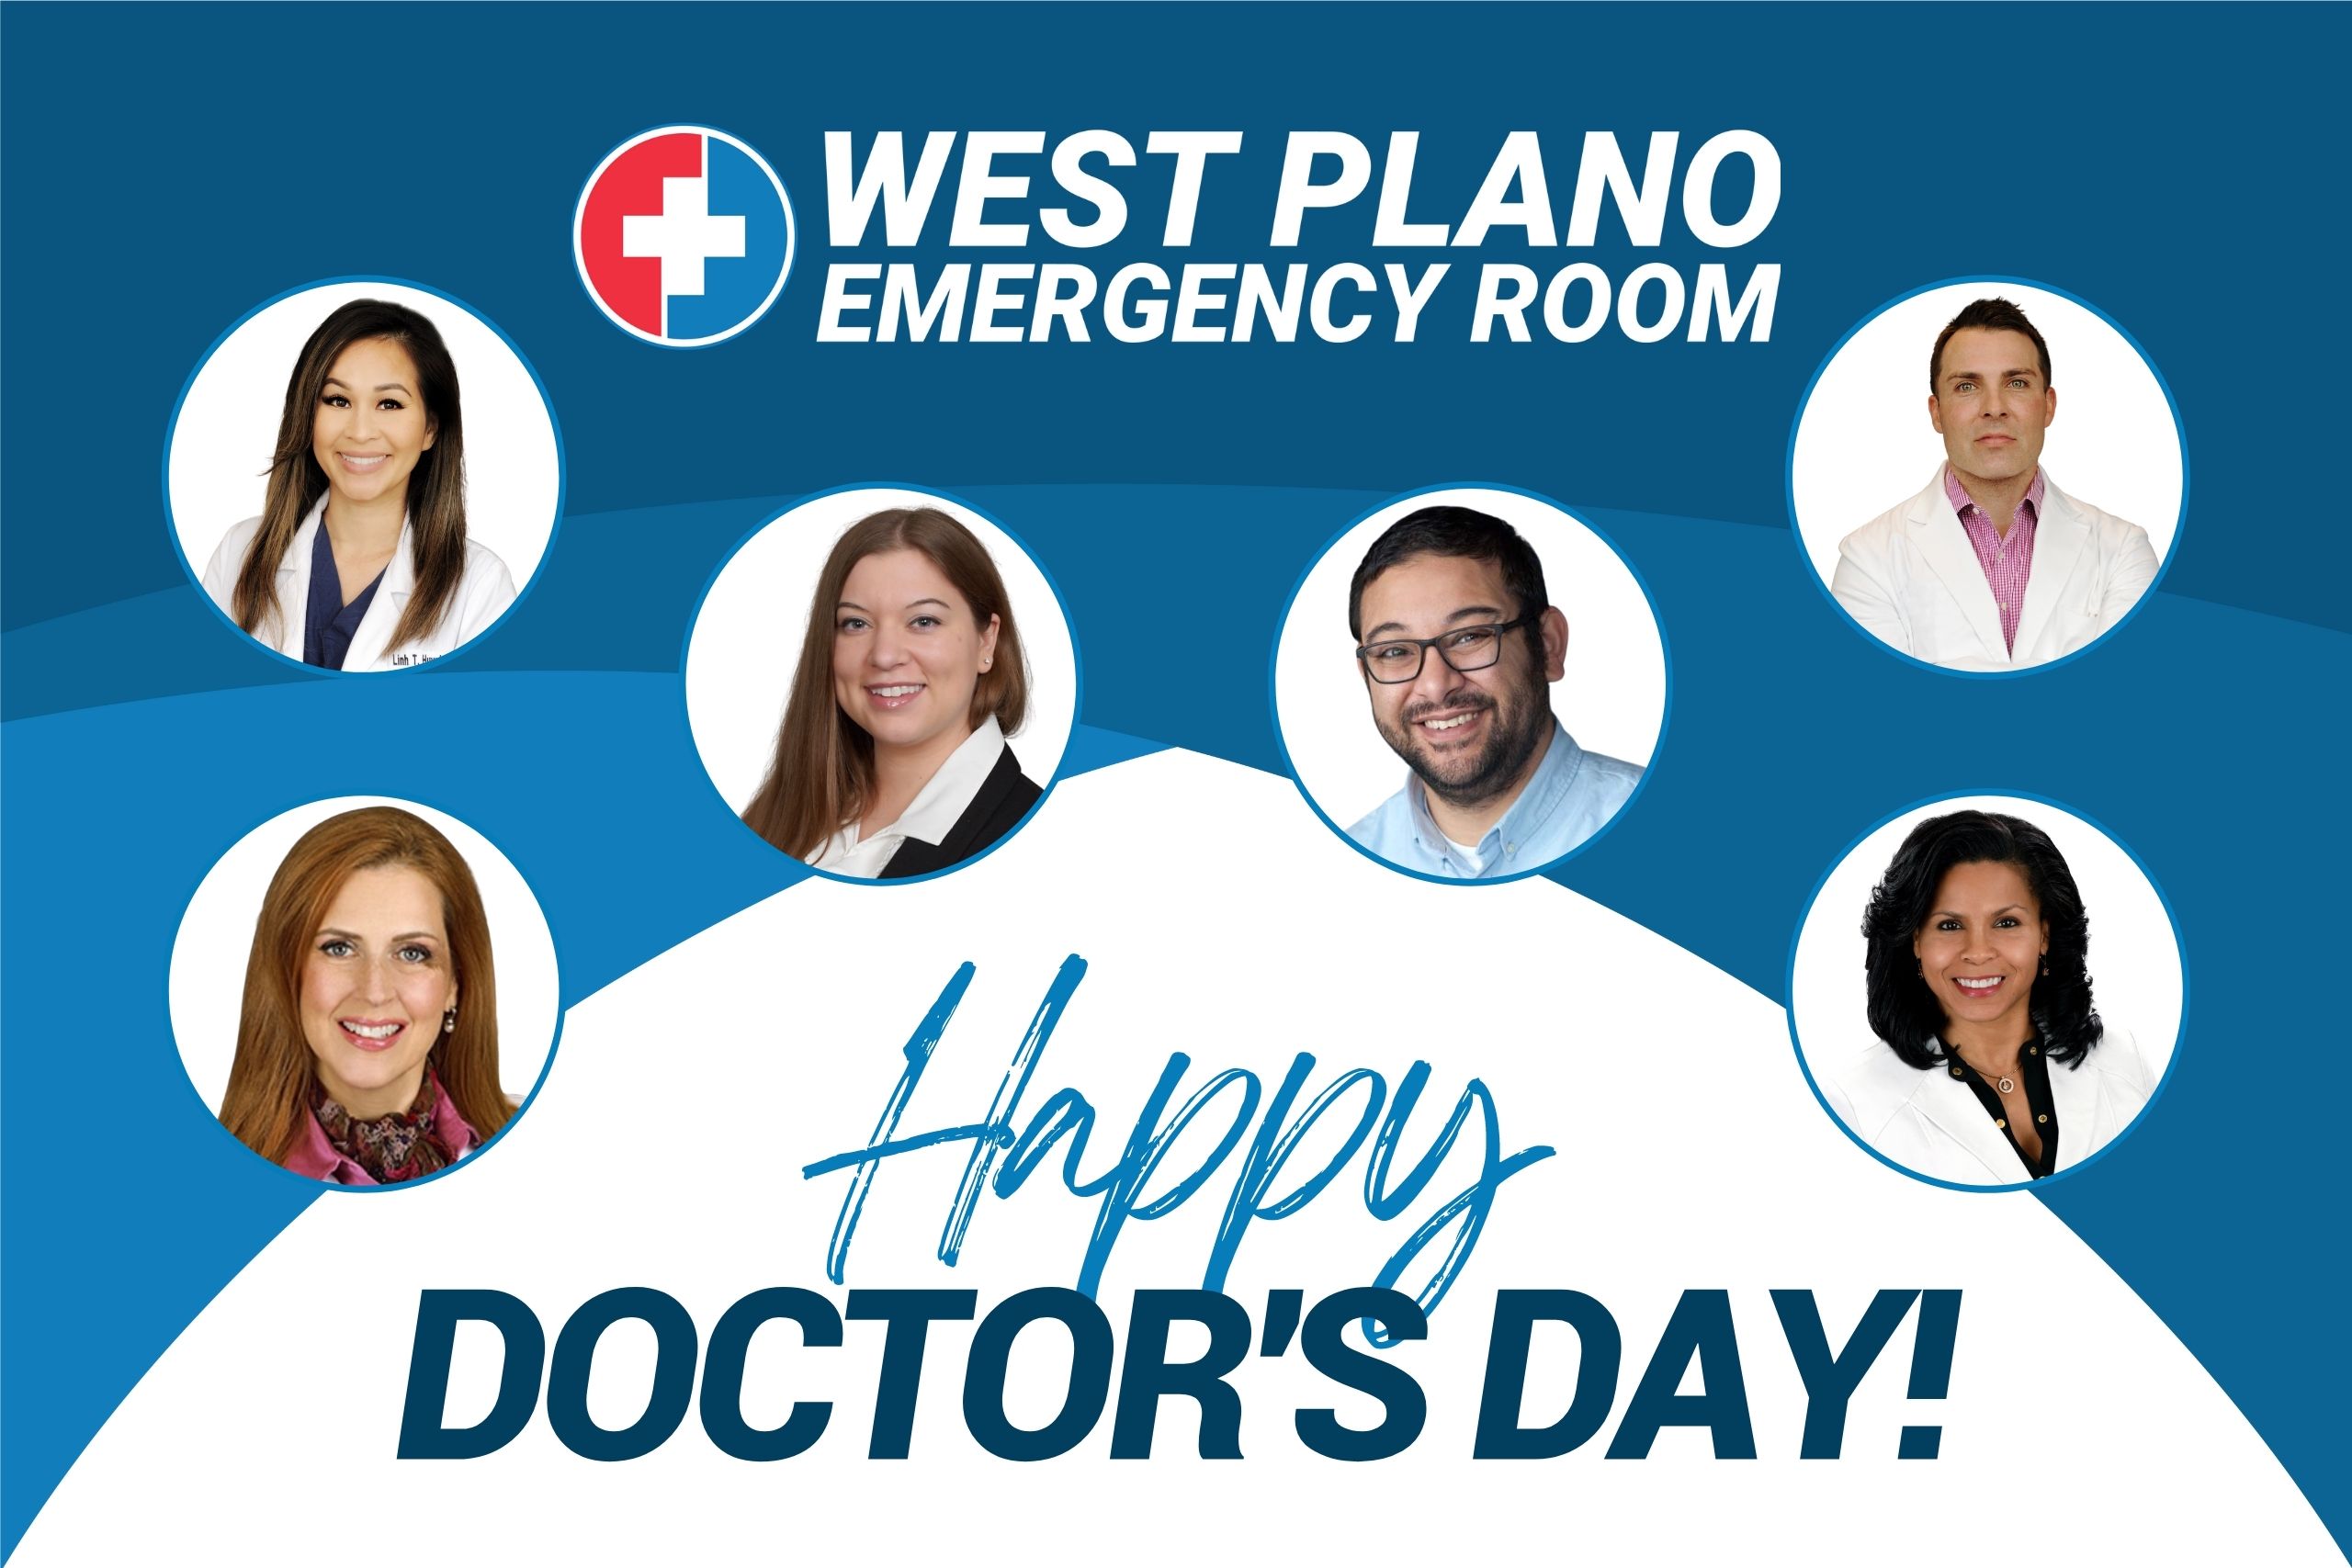 West Plano Emergency Room doctors